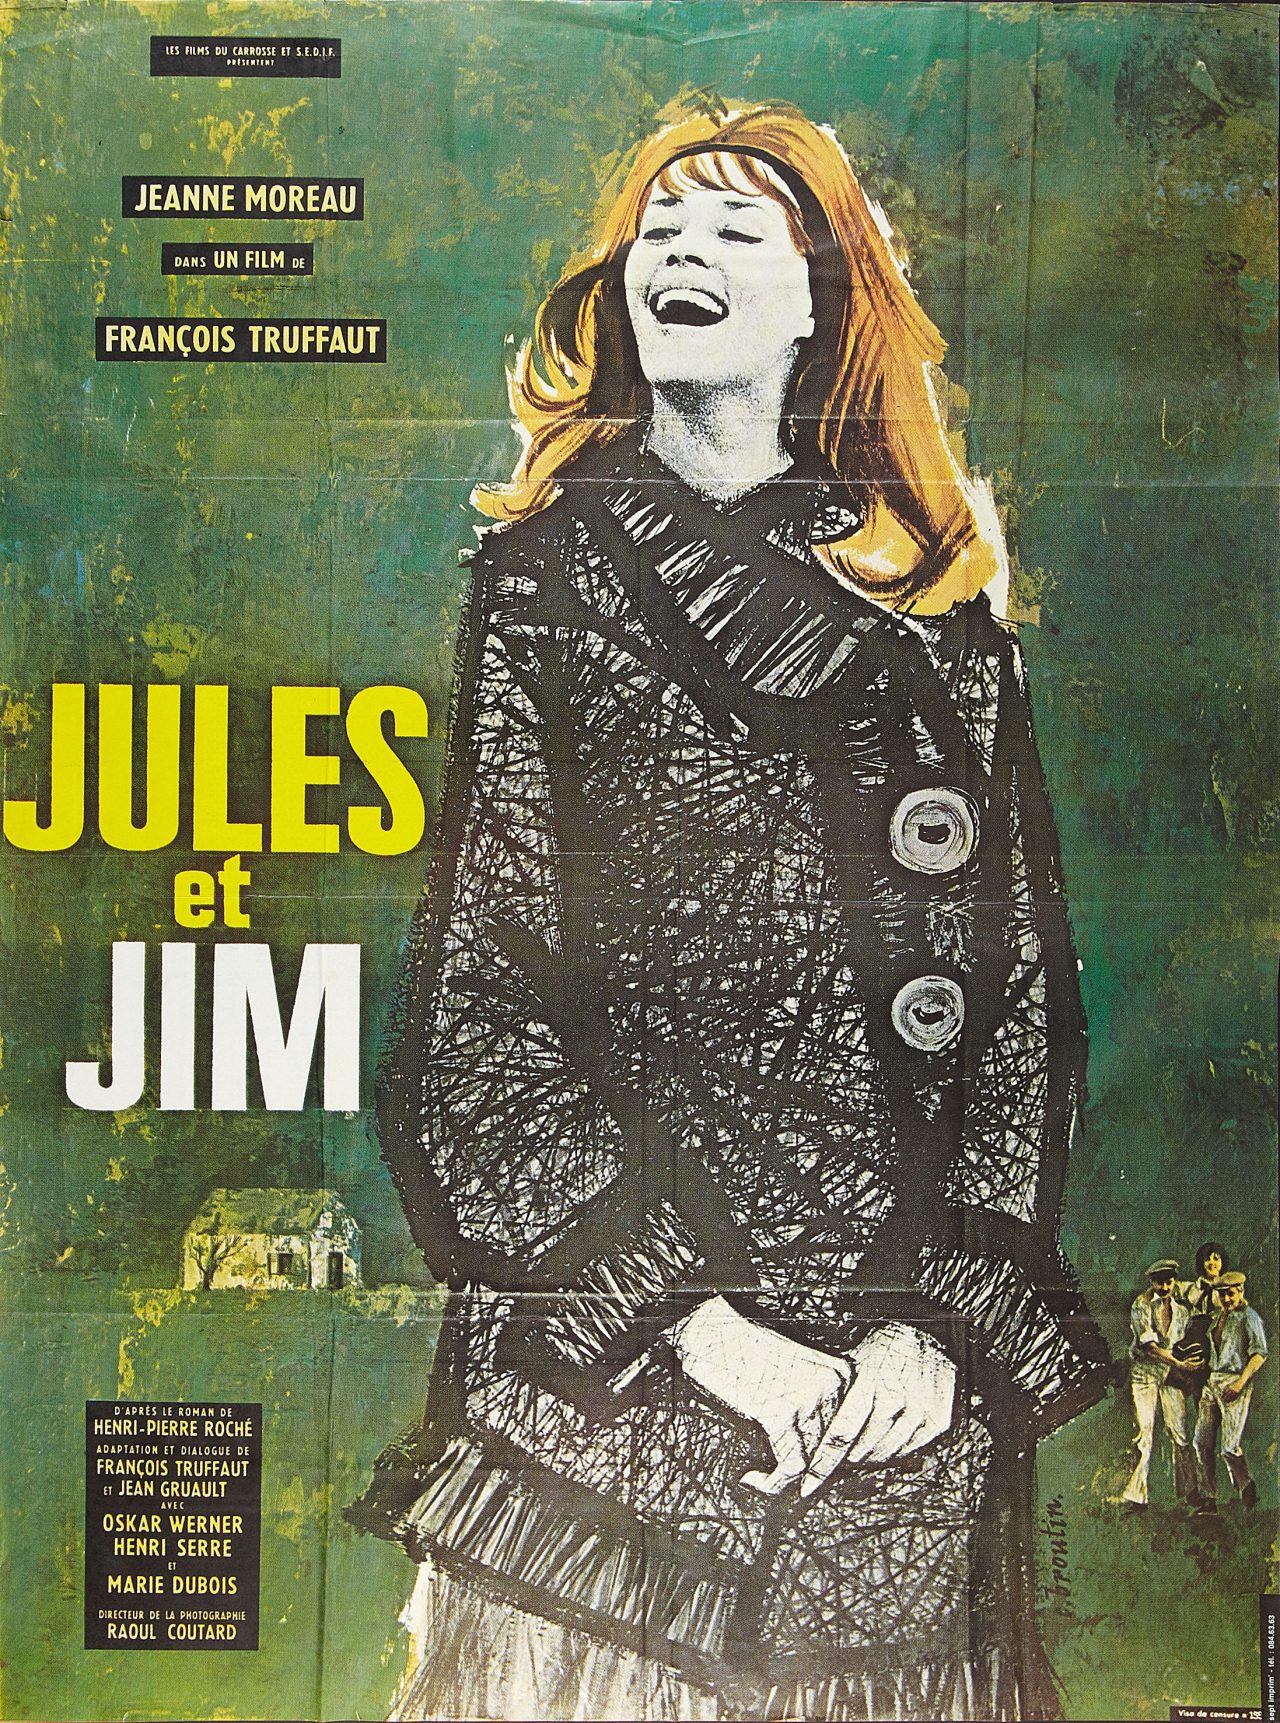 Poster of Jules et Jim directed by François Truffaut, 1962 c Flashbak